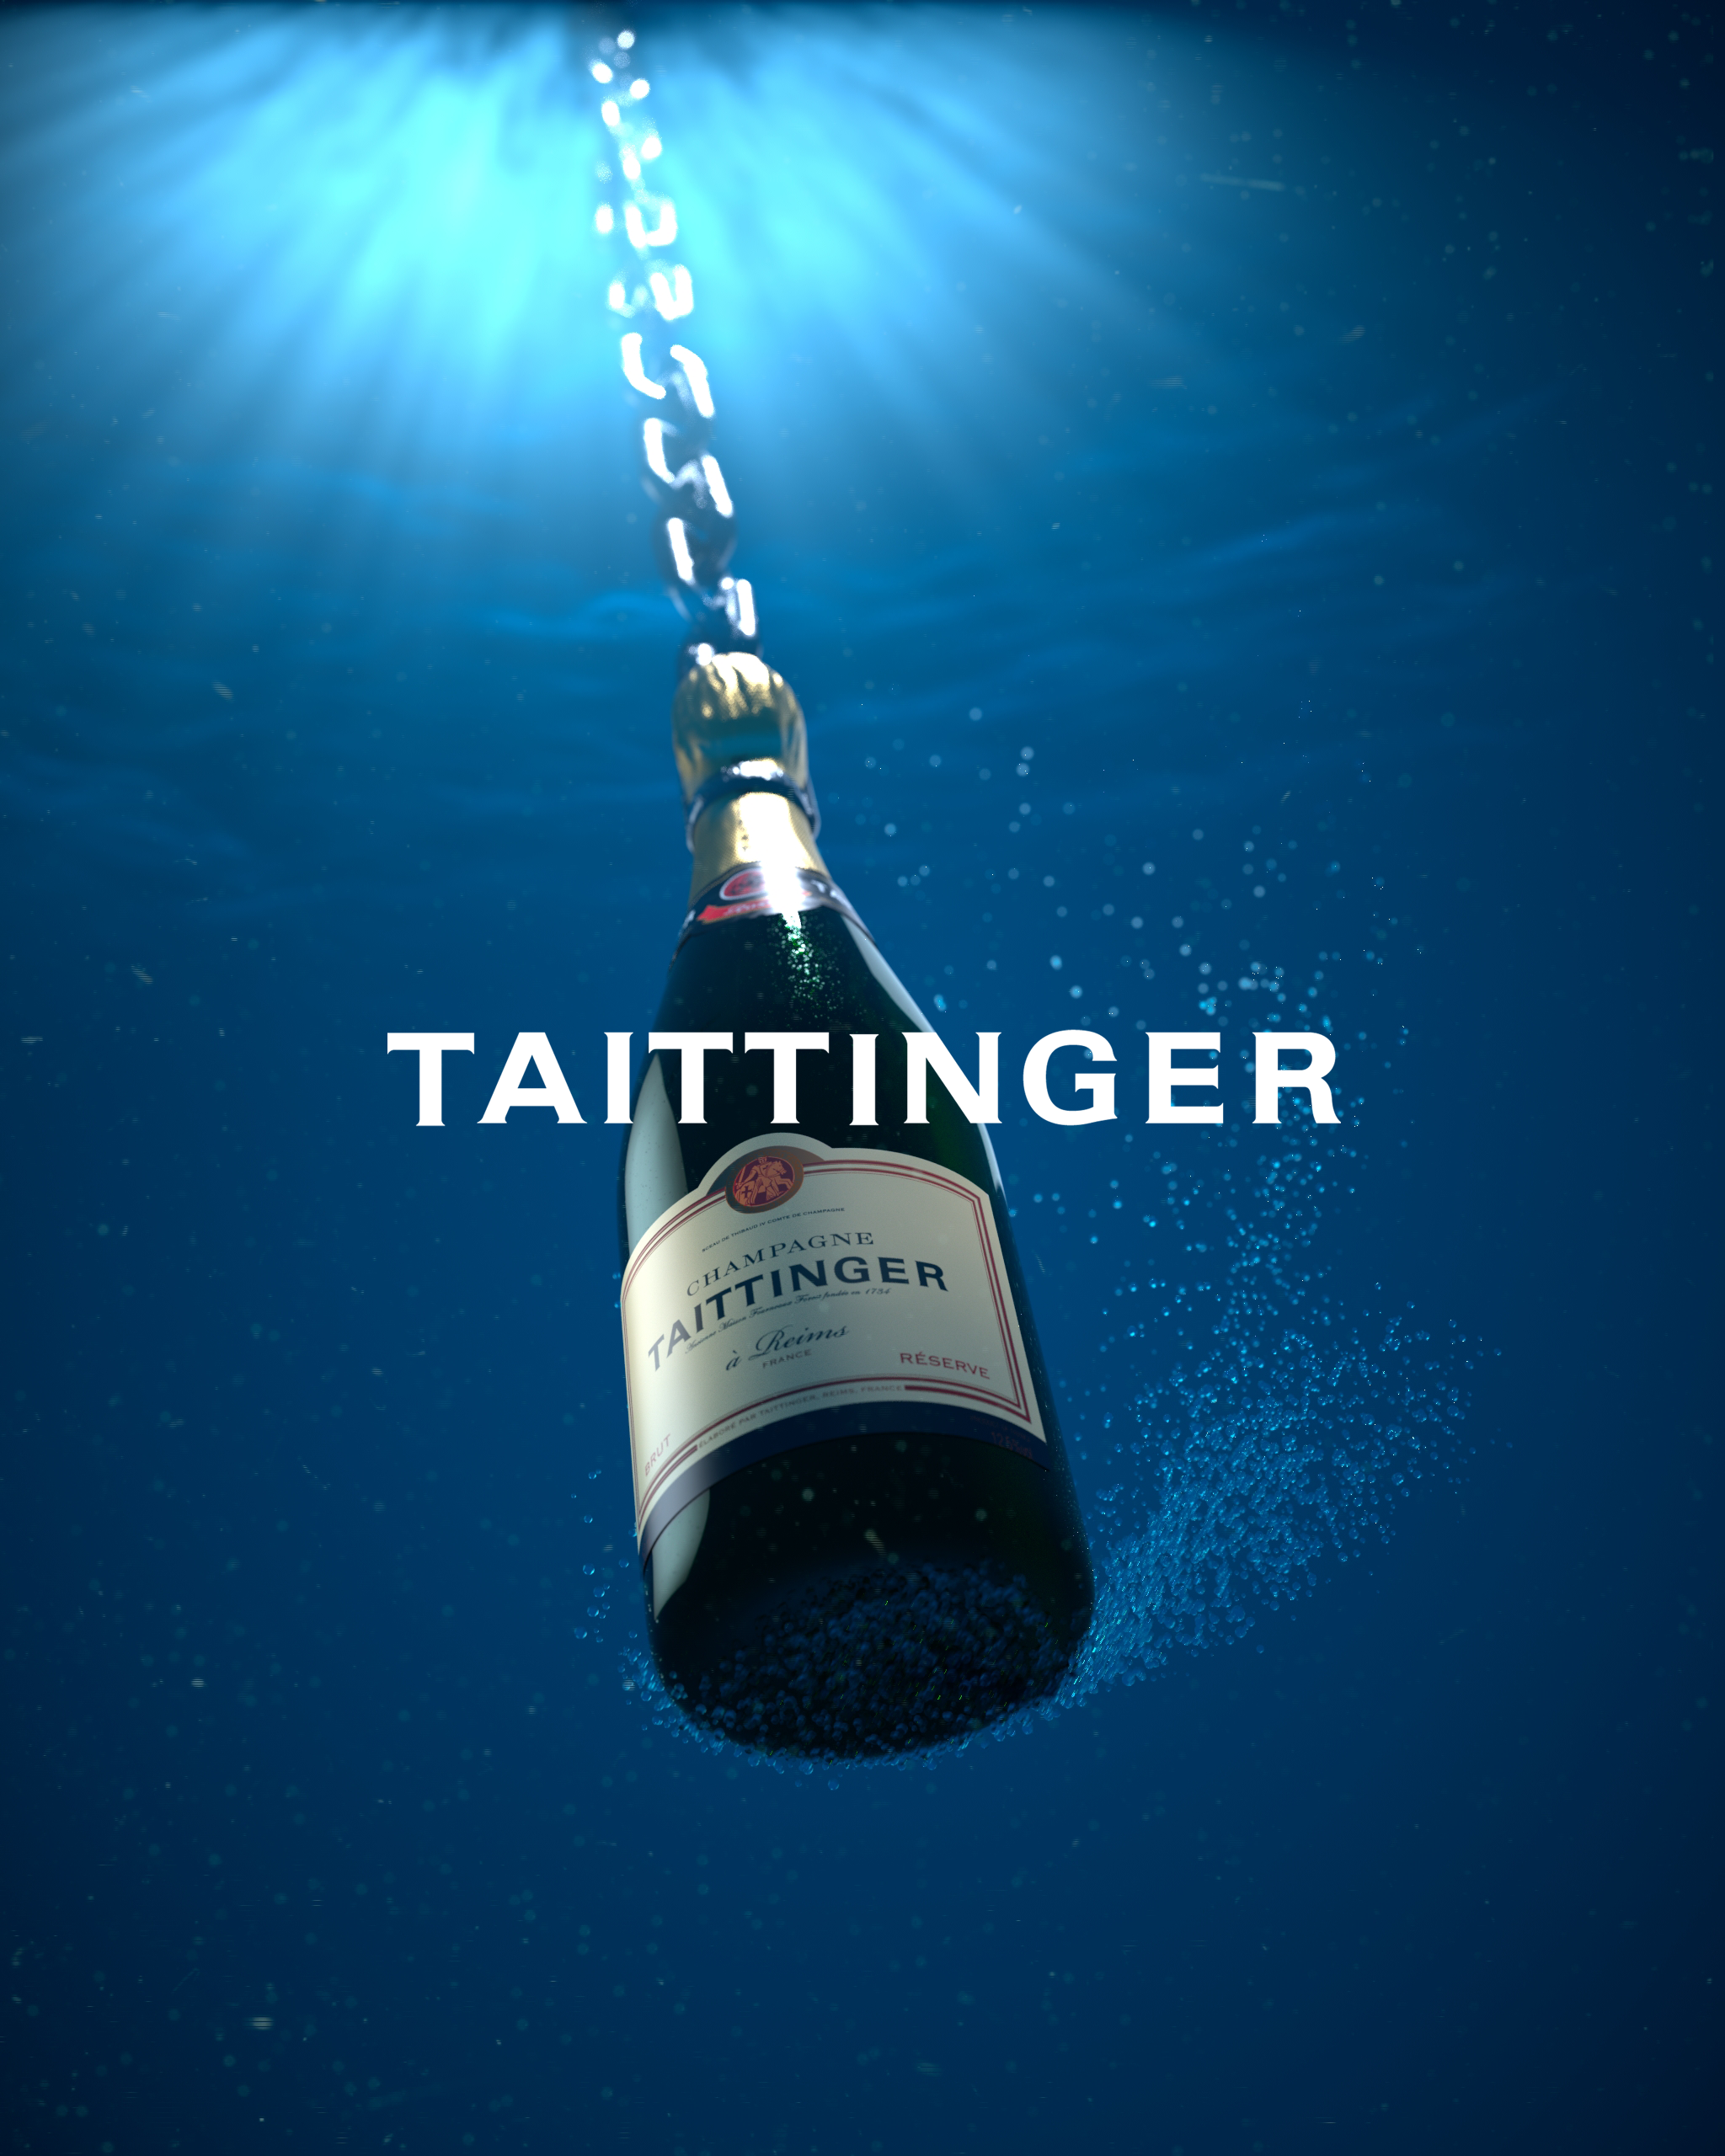 04 TAITTINGER - MESSAGE IN A BOTTLE bottle underwater logo.png